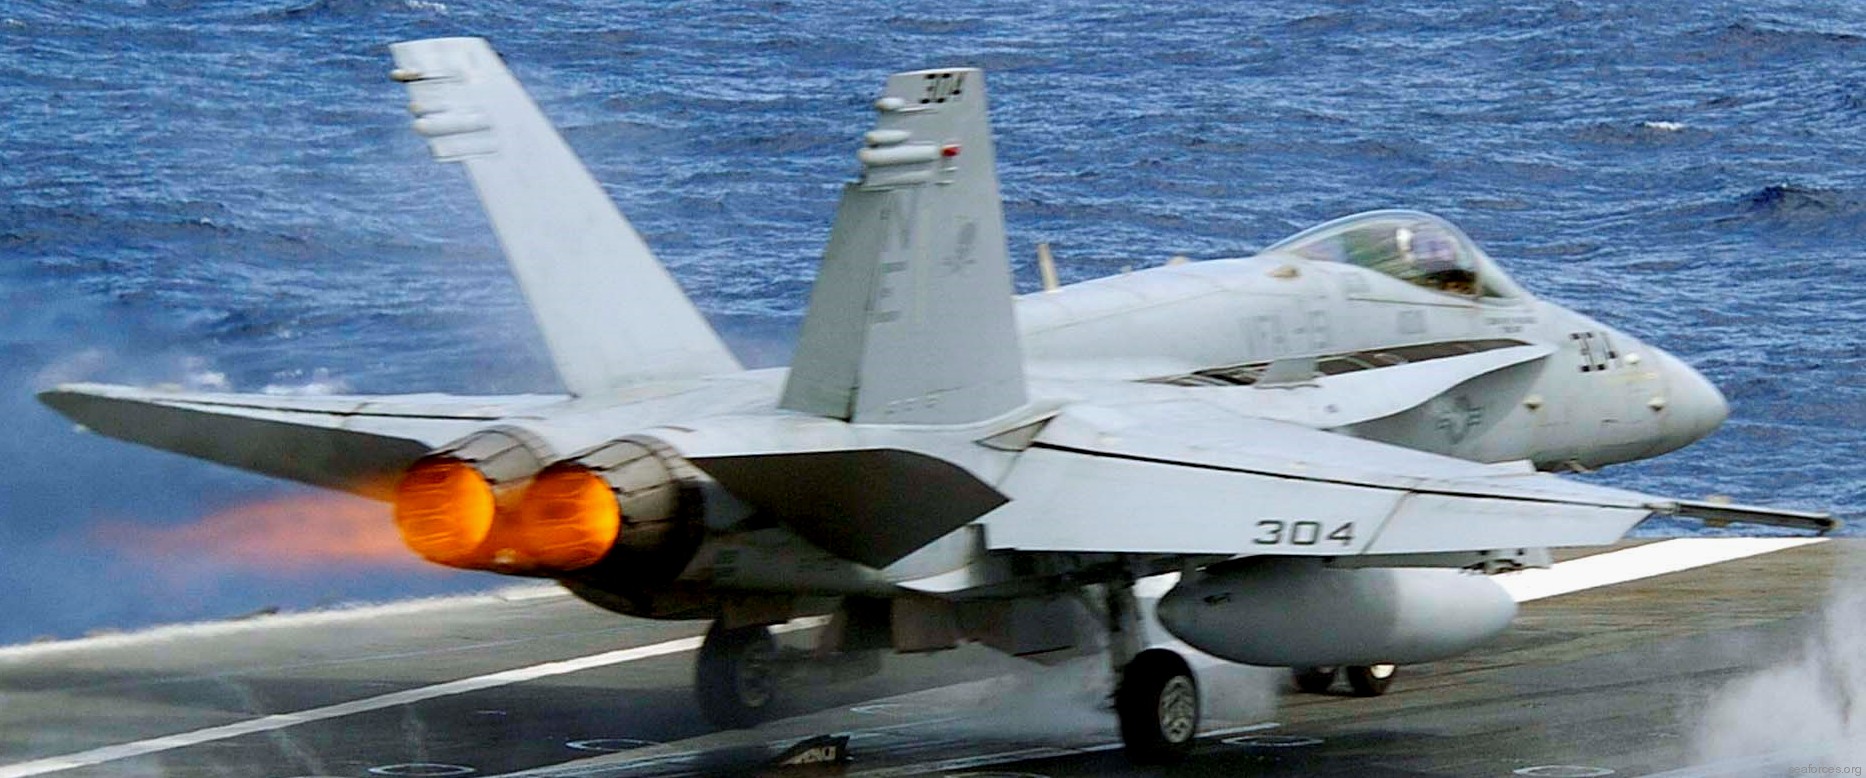 vfa-151 vigilantes strike fighter squadron navy f/a-18c hornet carrier air wing cvw-2 uss abraham lincoln cvn-72 67